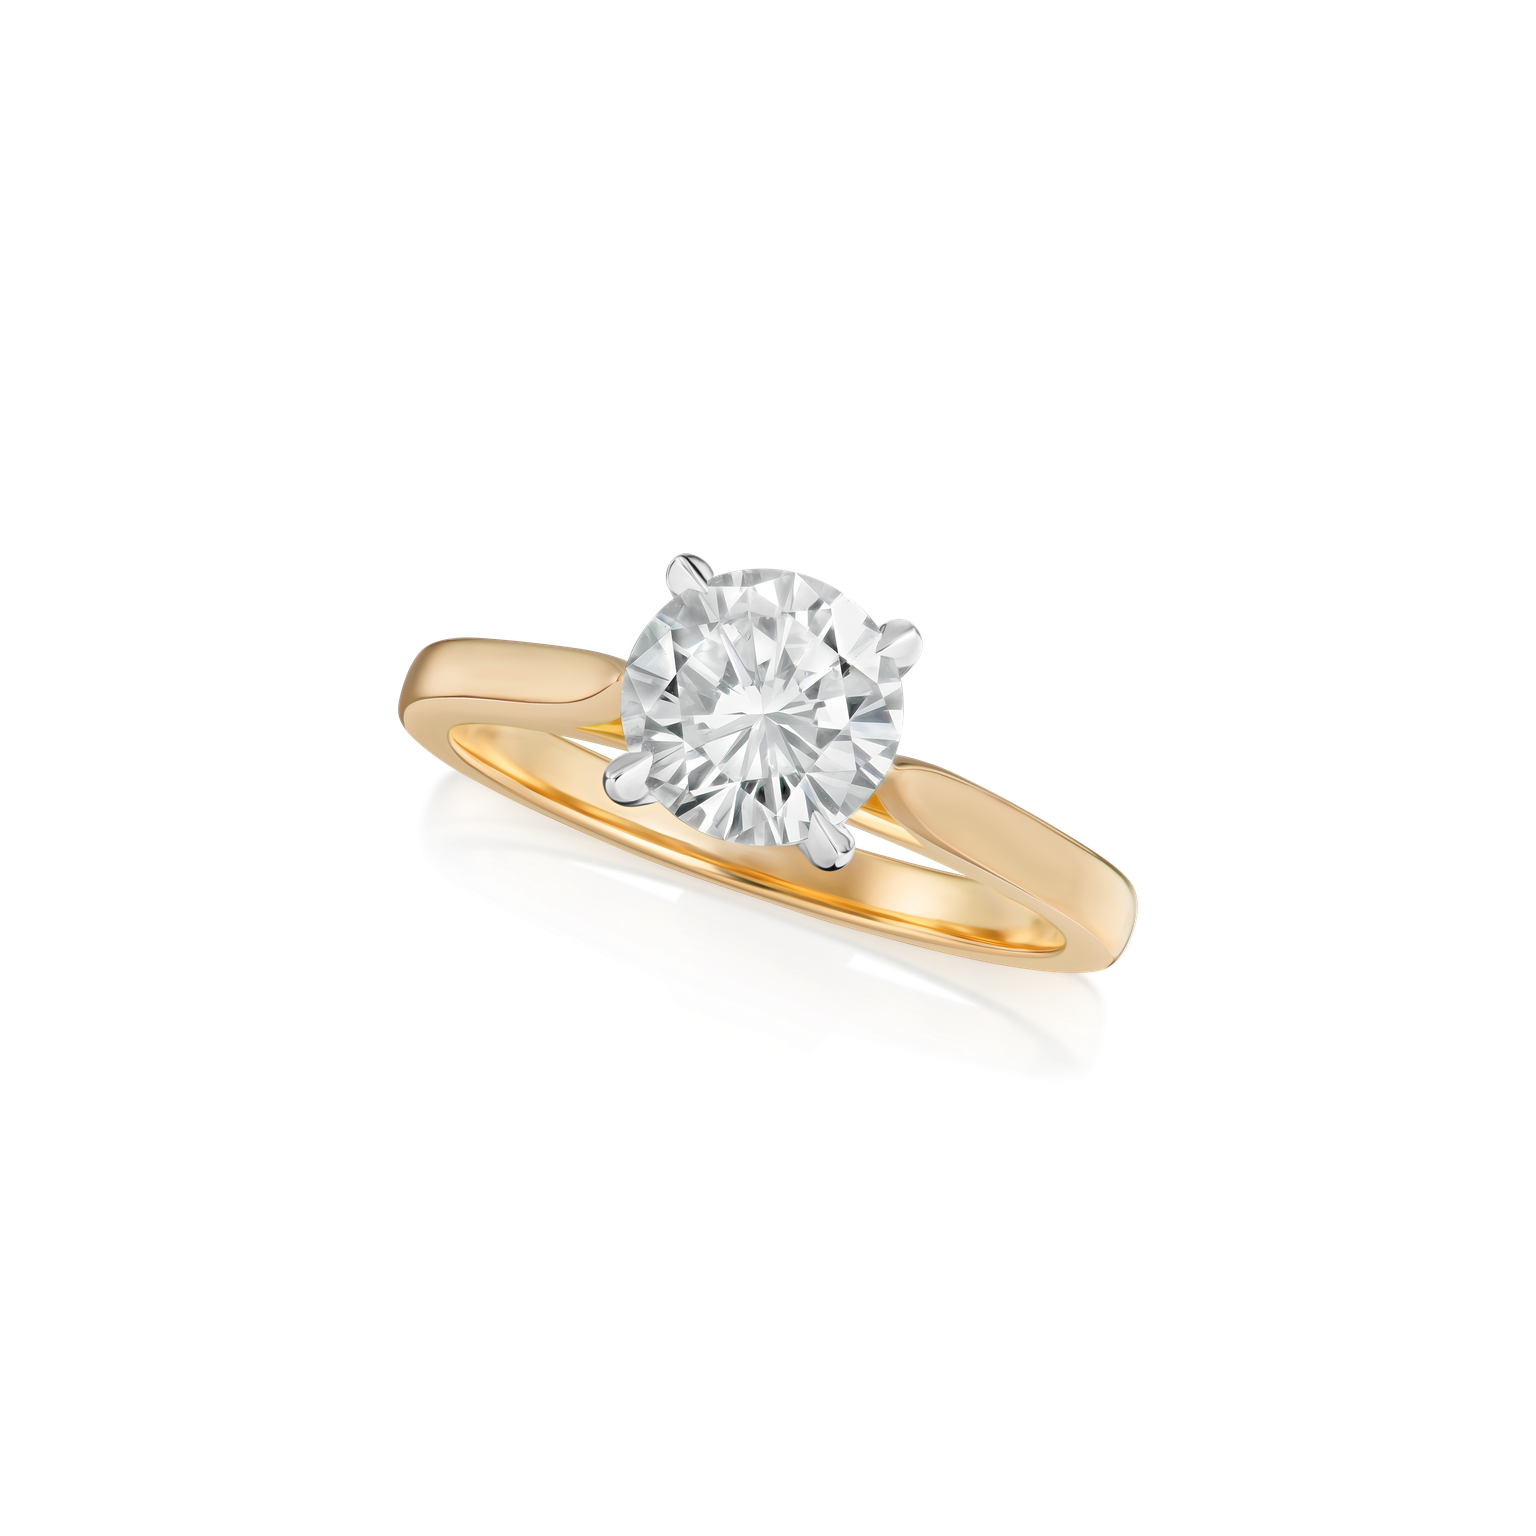 1.08cts Round Brilliant-Cut Diamond Solitaire Ring